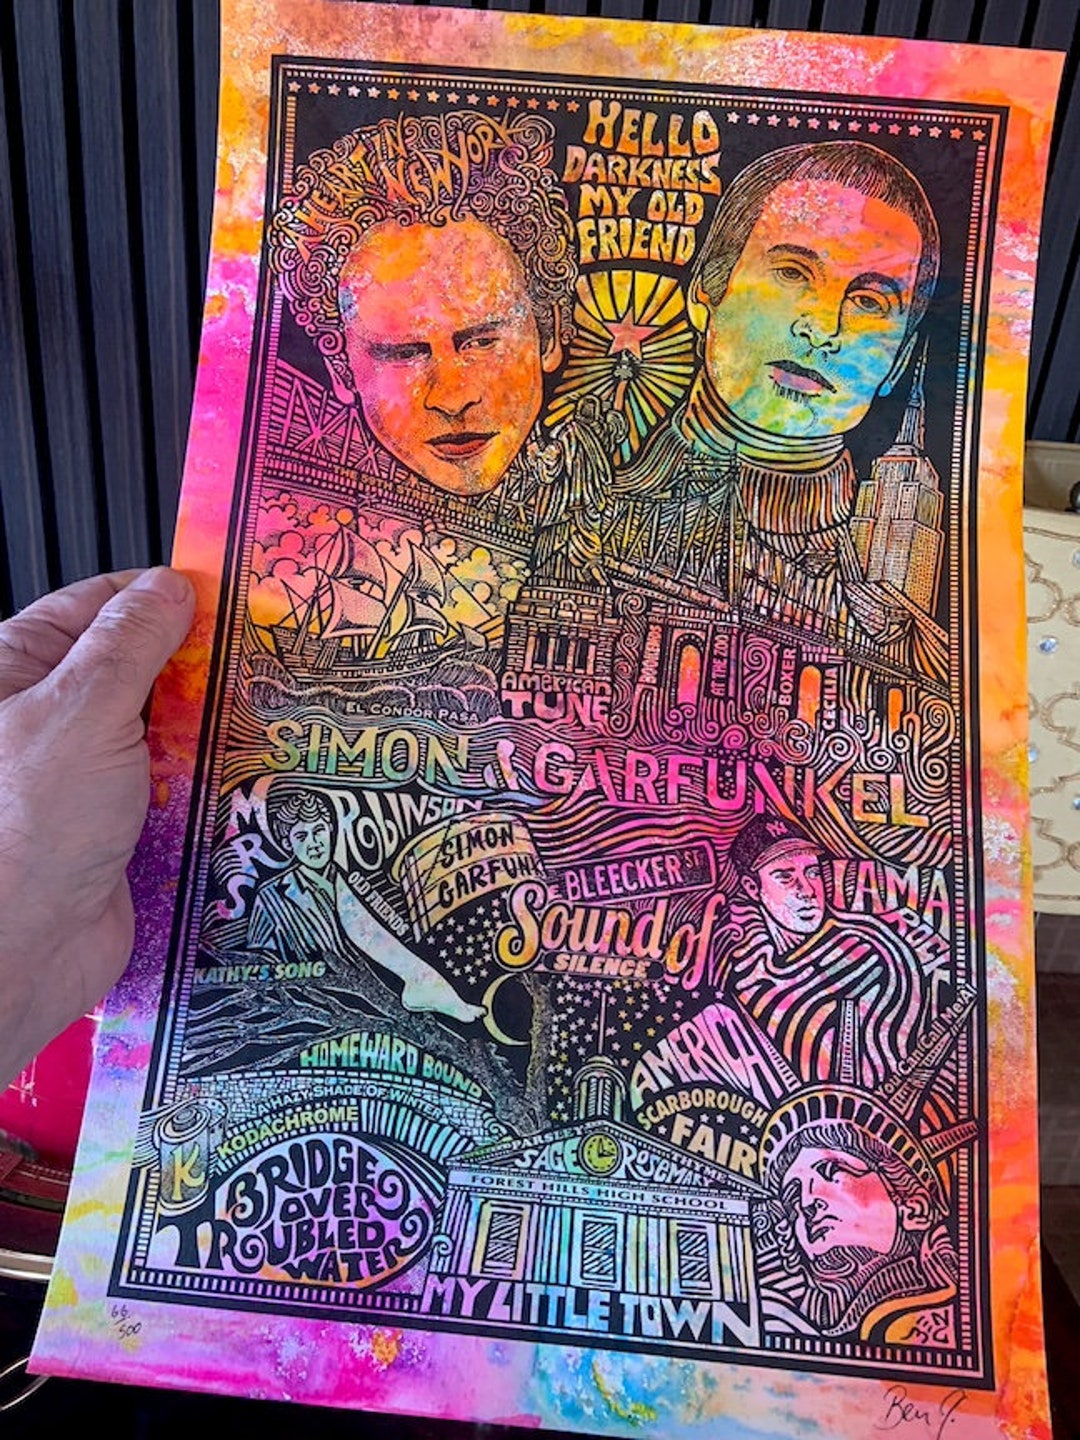 Simon & Garfunkel Poster, Paul Simon, Art Garfunkel, Hand-colored by  Posterography 